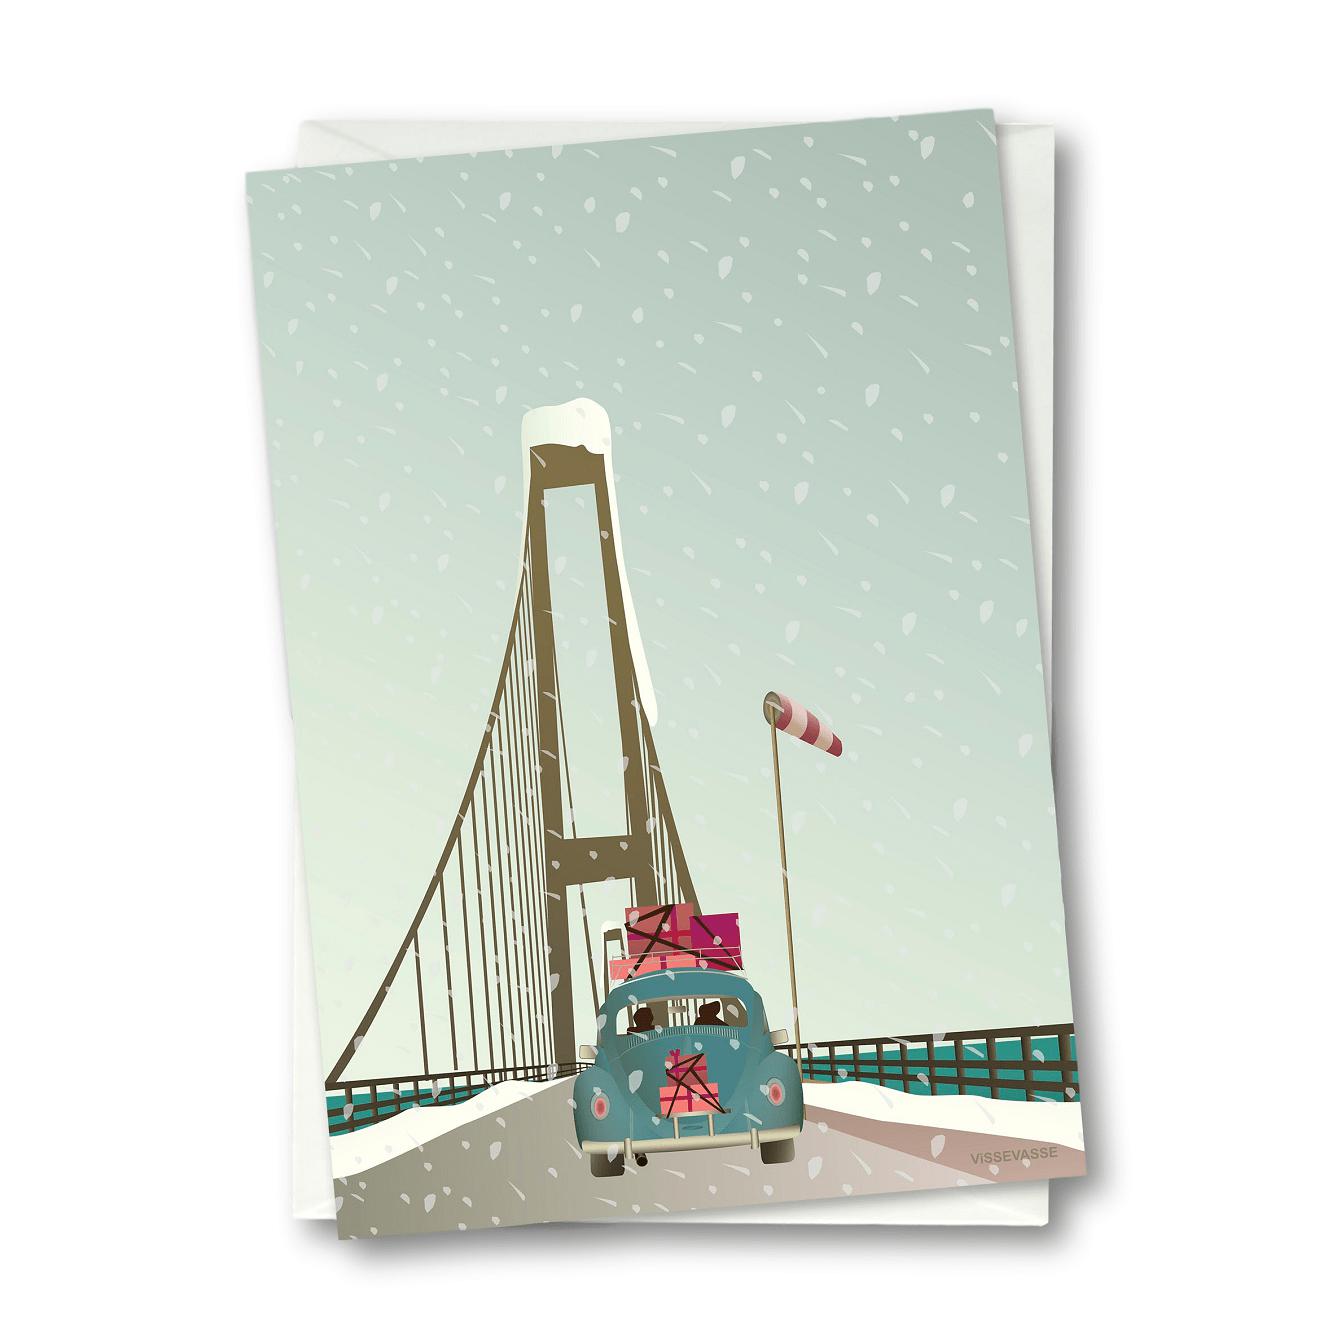 Vissevasse Driving Home For Christmas Greeting Card, 10,5x15cm